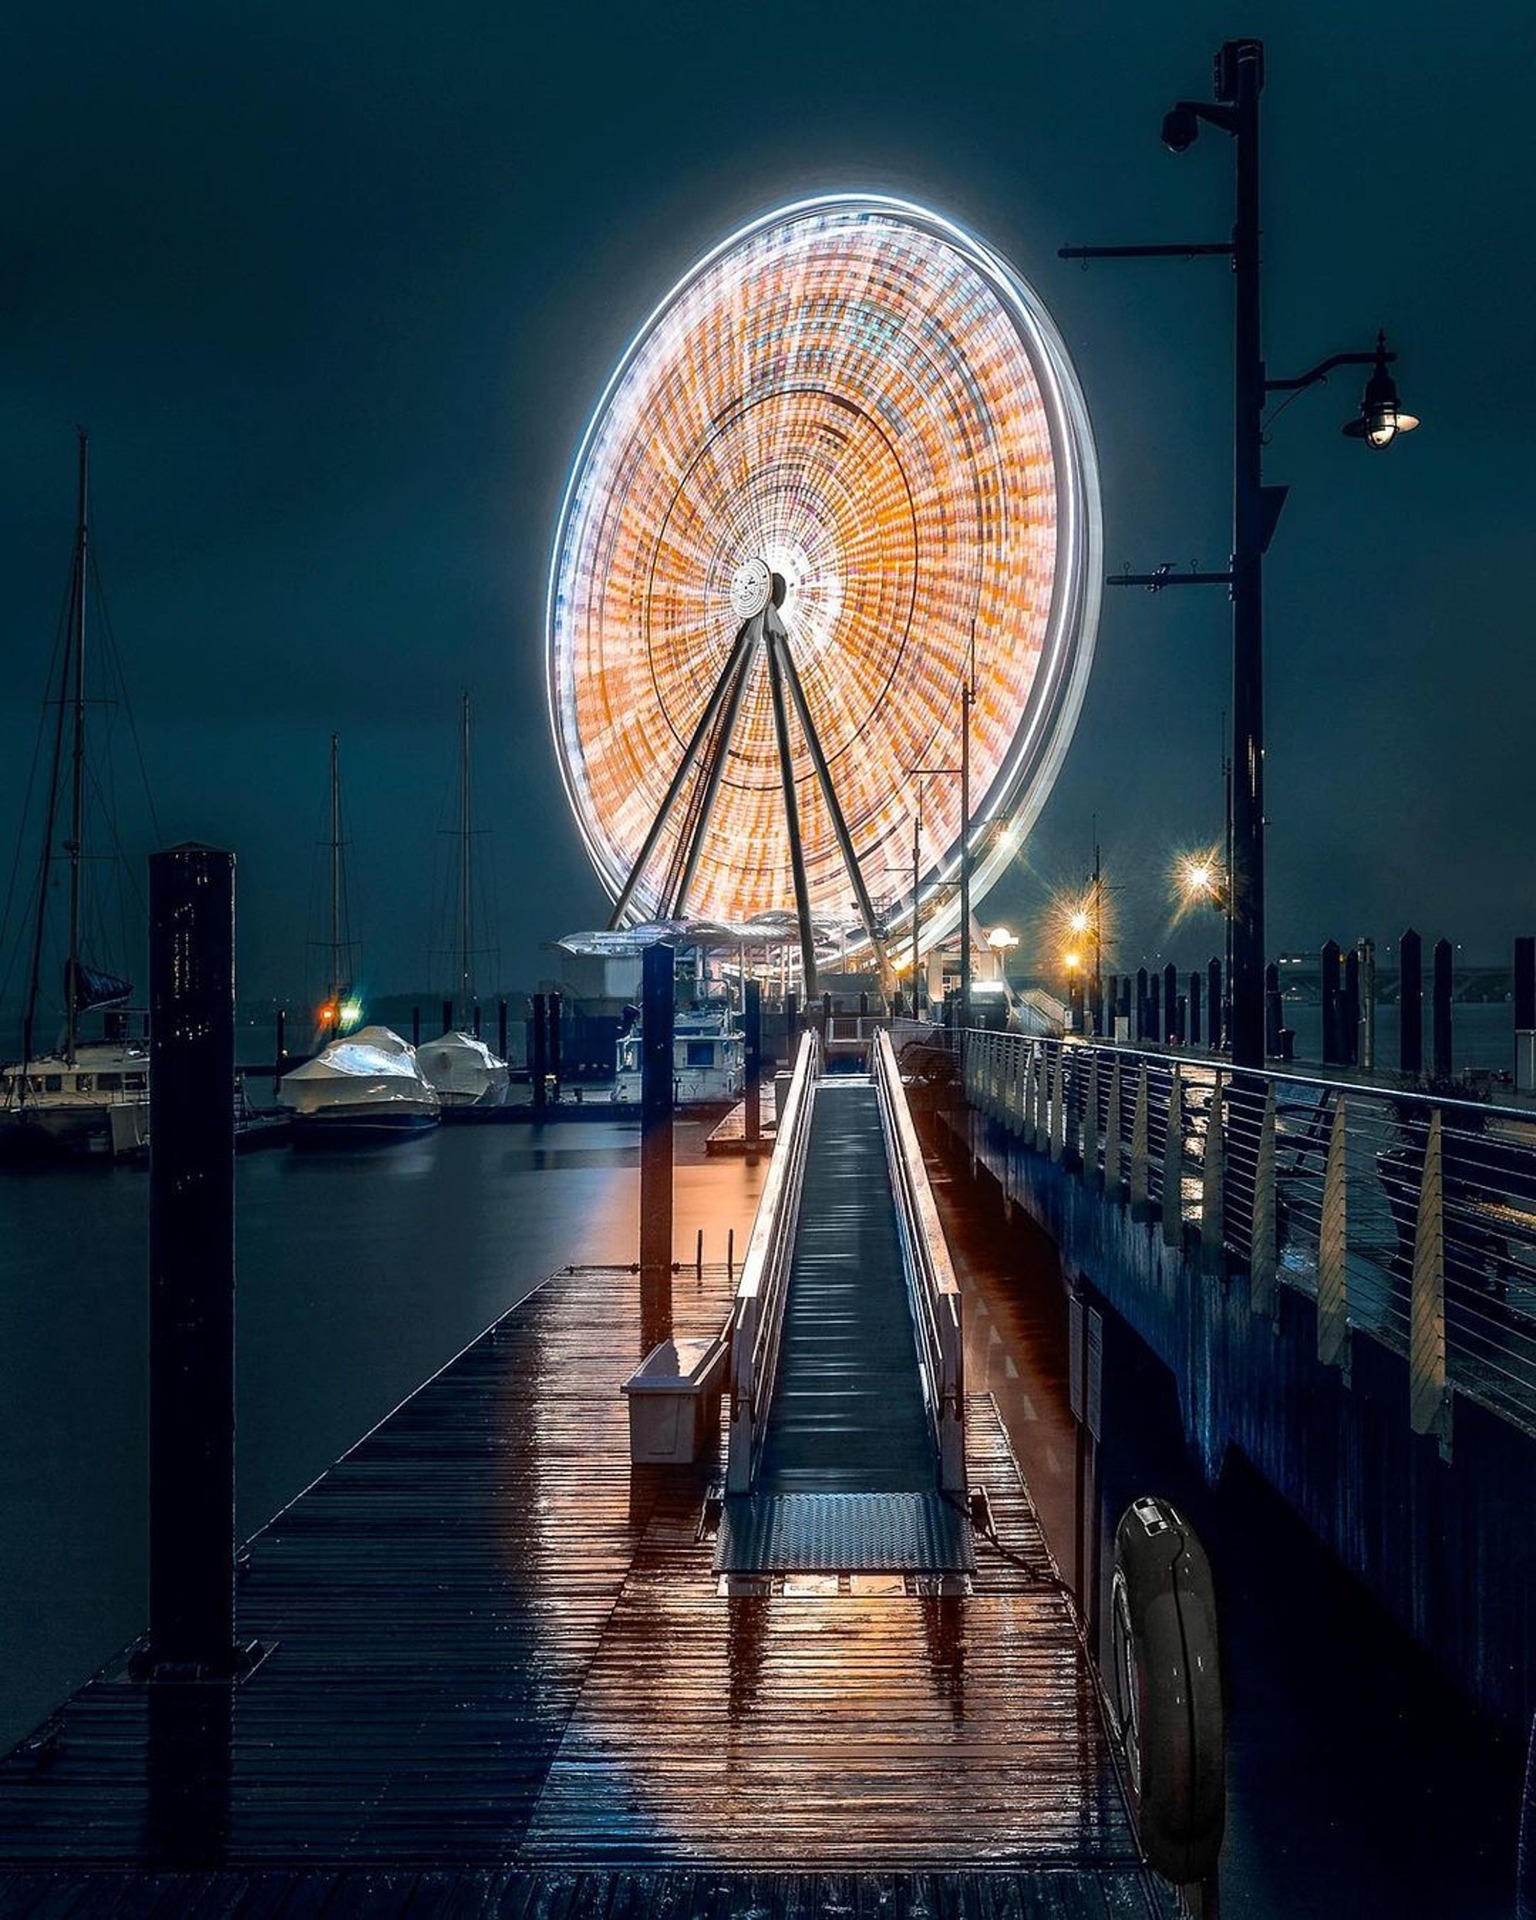 Big wheel of fortune at night.